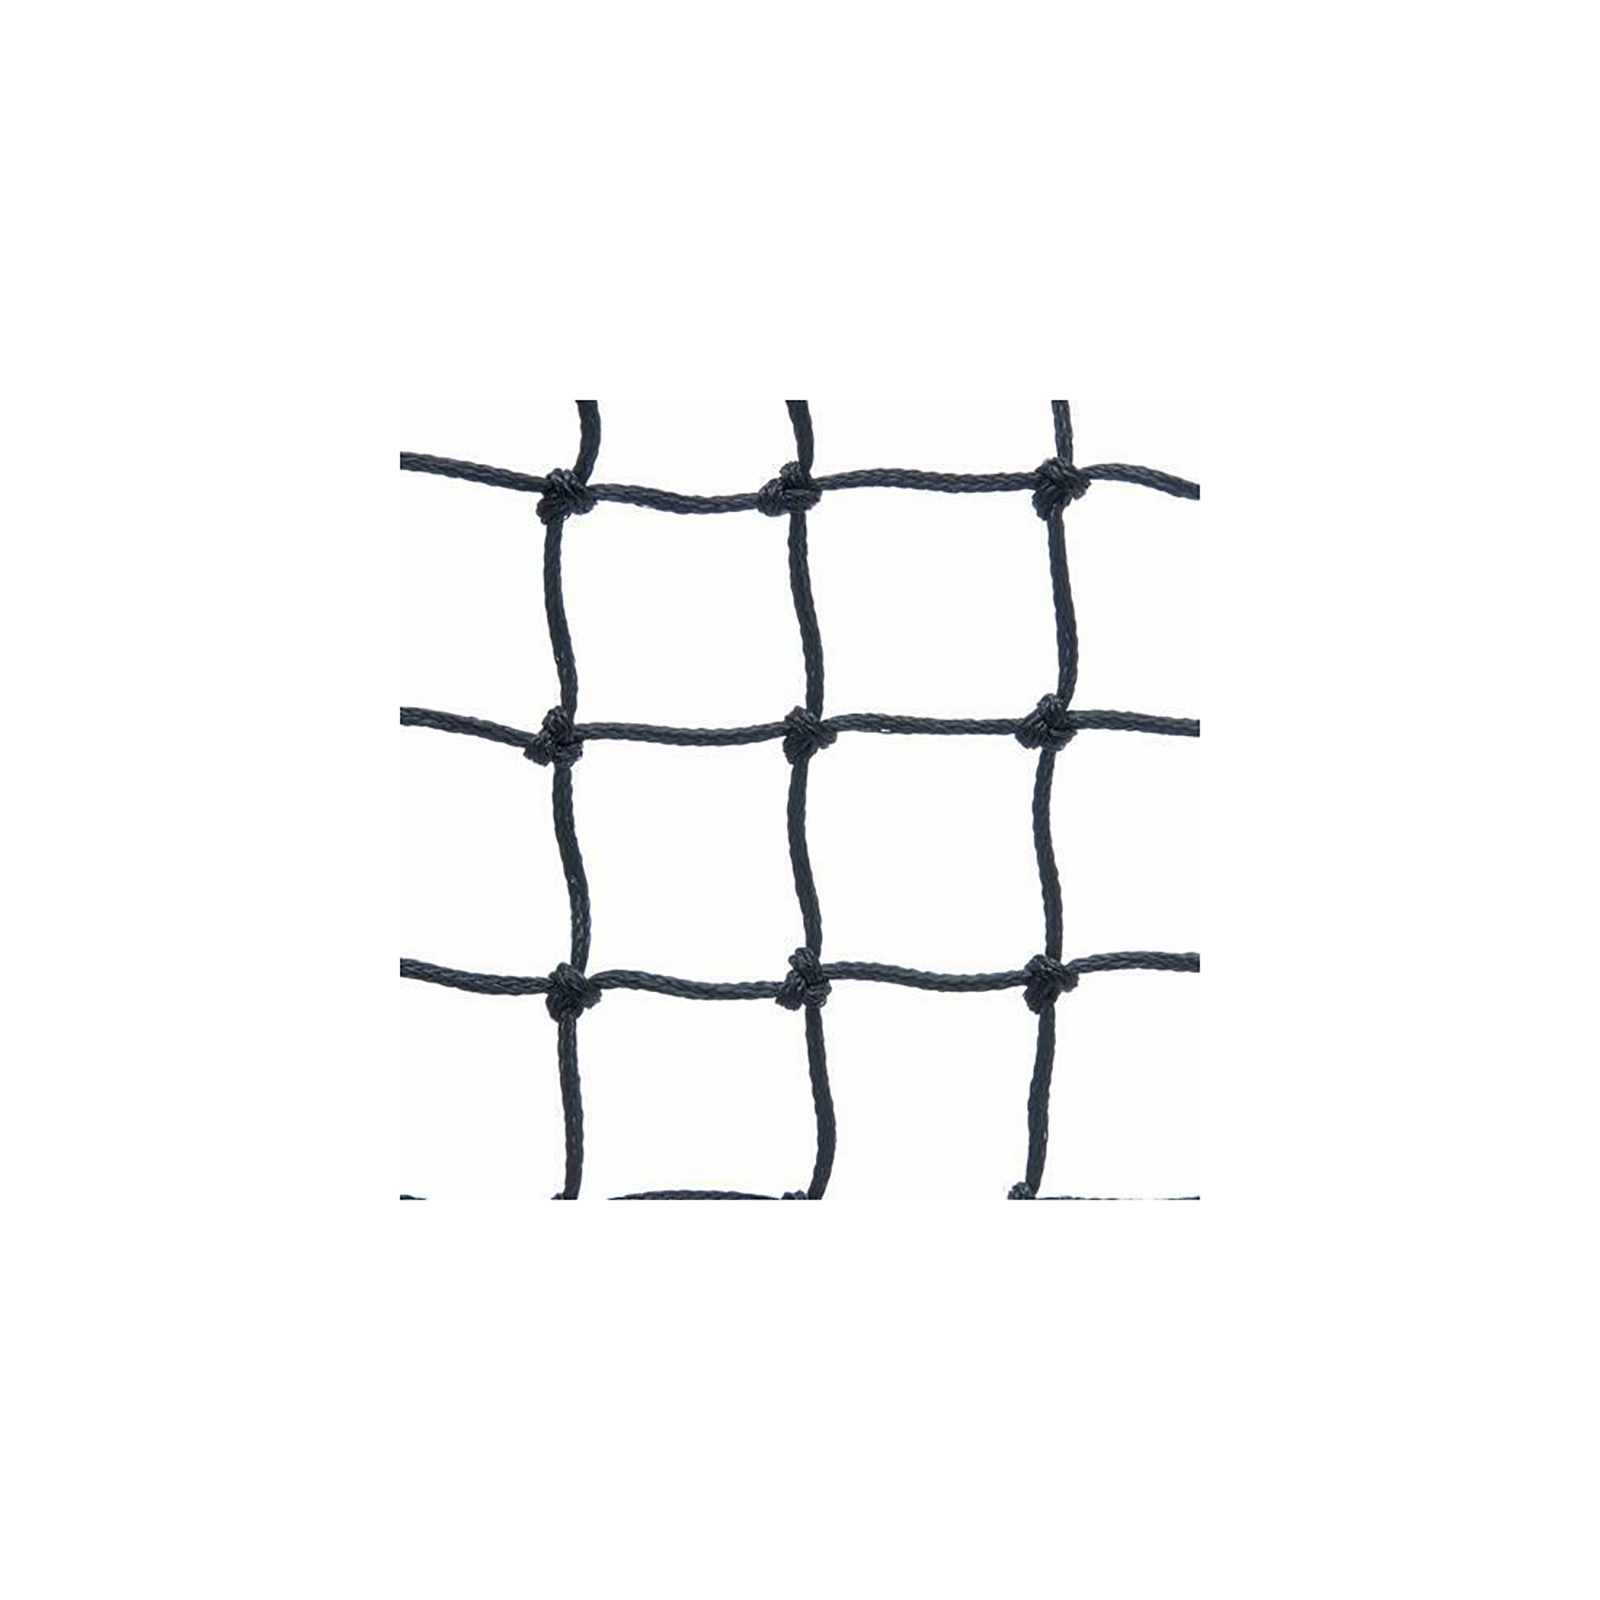 Edwards Ausie Polyethylene 3.0 Tennis Net–Black